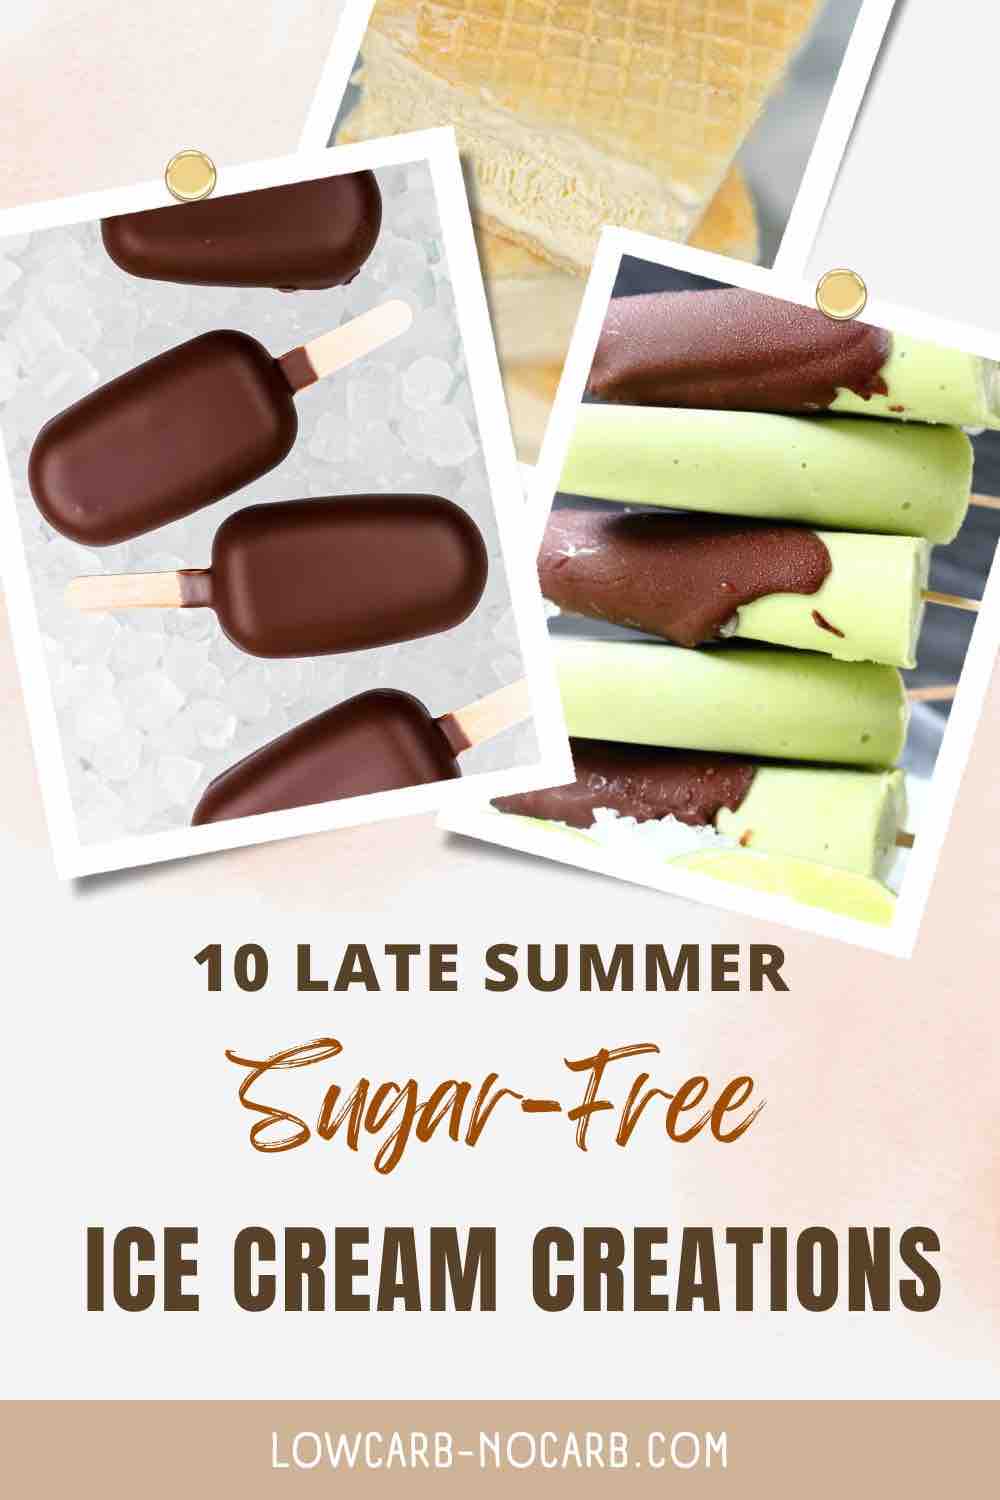 10 late summer sugar - free ice cream creations.